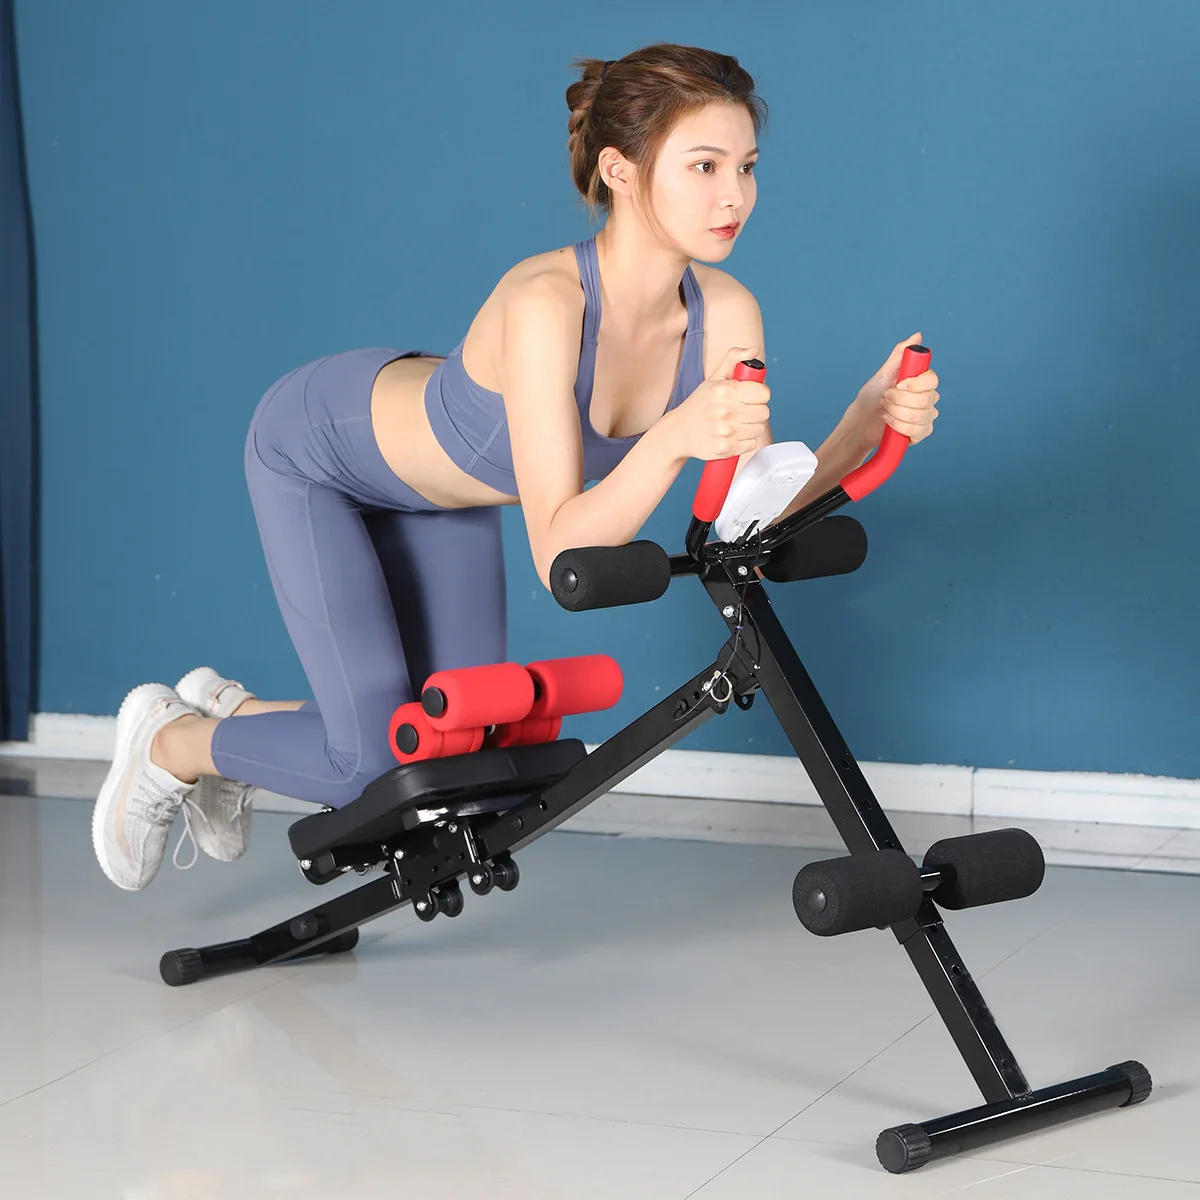 Home Fitness Equipment Beautify Waist Machine Abdominal Muscle Training Device Supine Support Abdominal Rolling Machine Sport